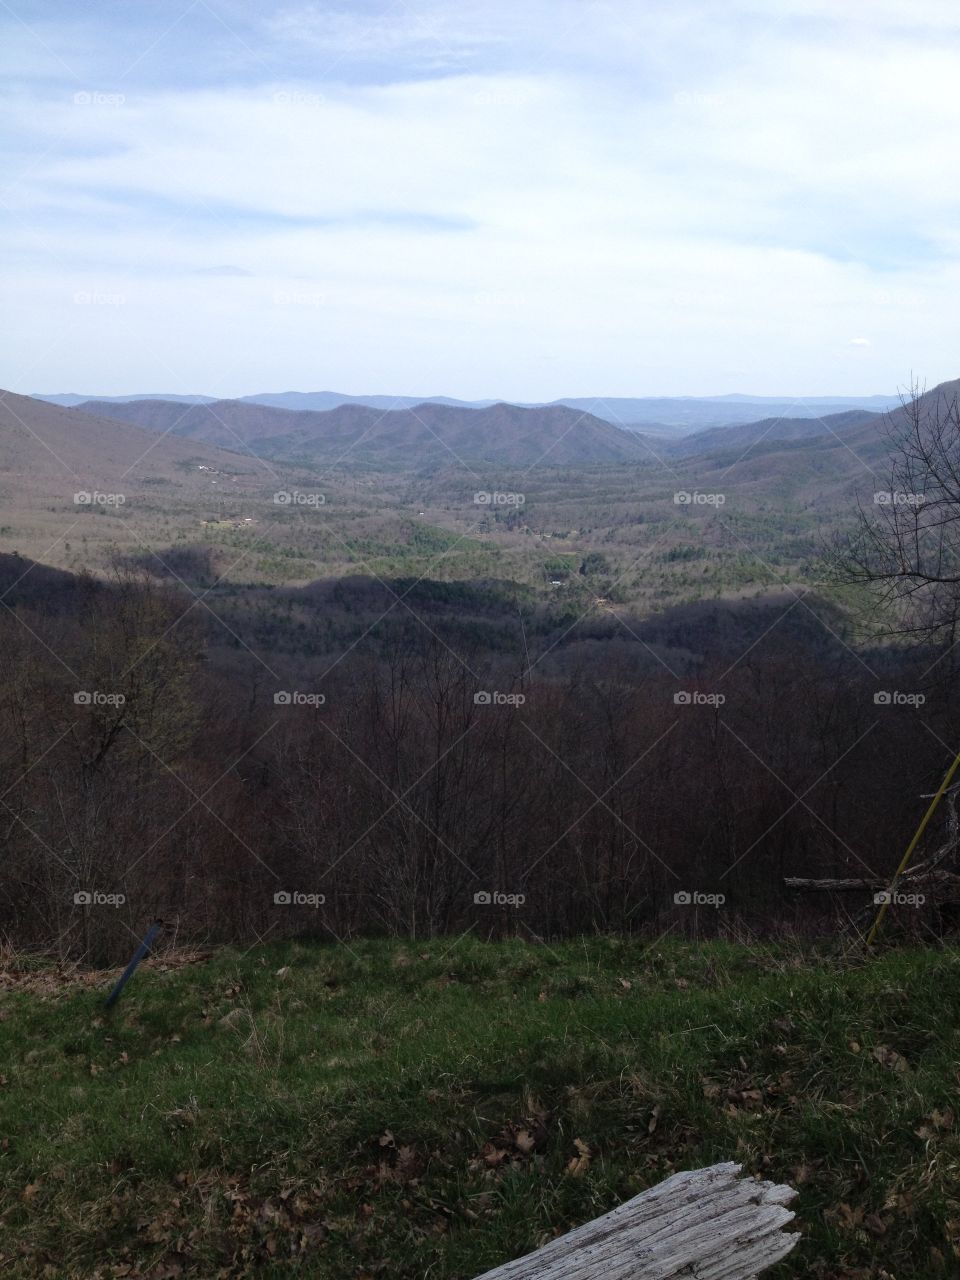 Big Walker Overlook. The view from the lookout at Big Walker Mtn in Virginia